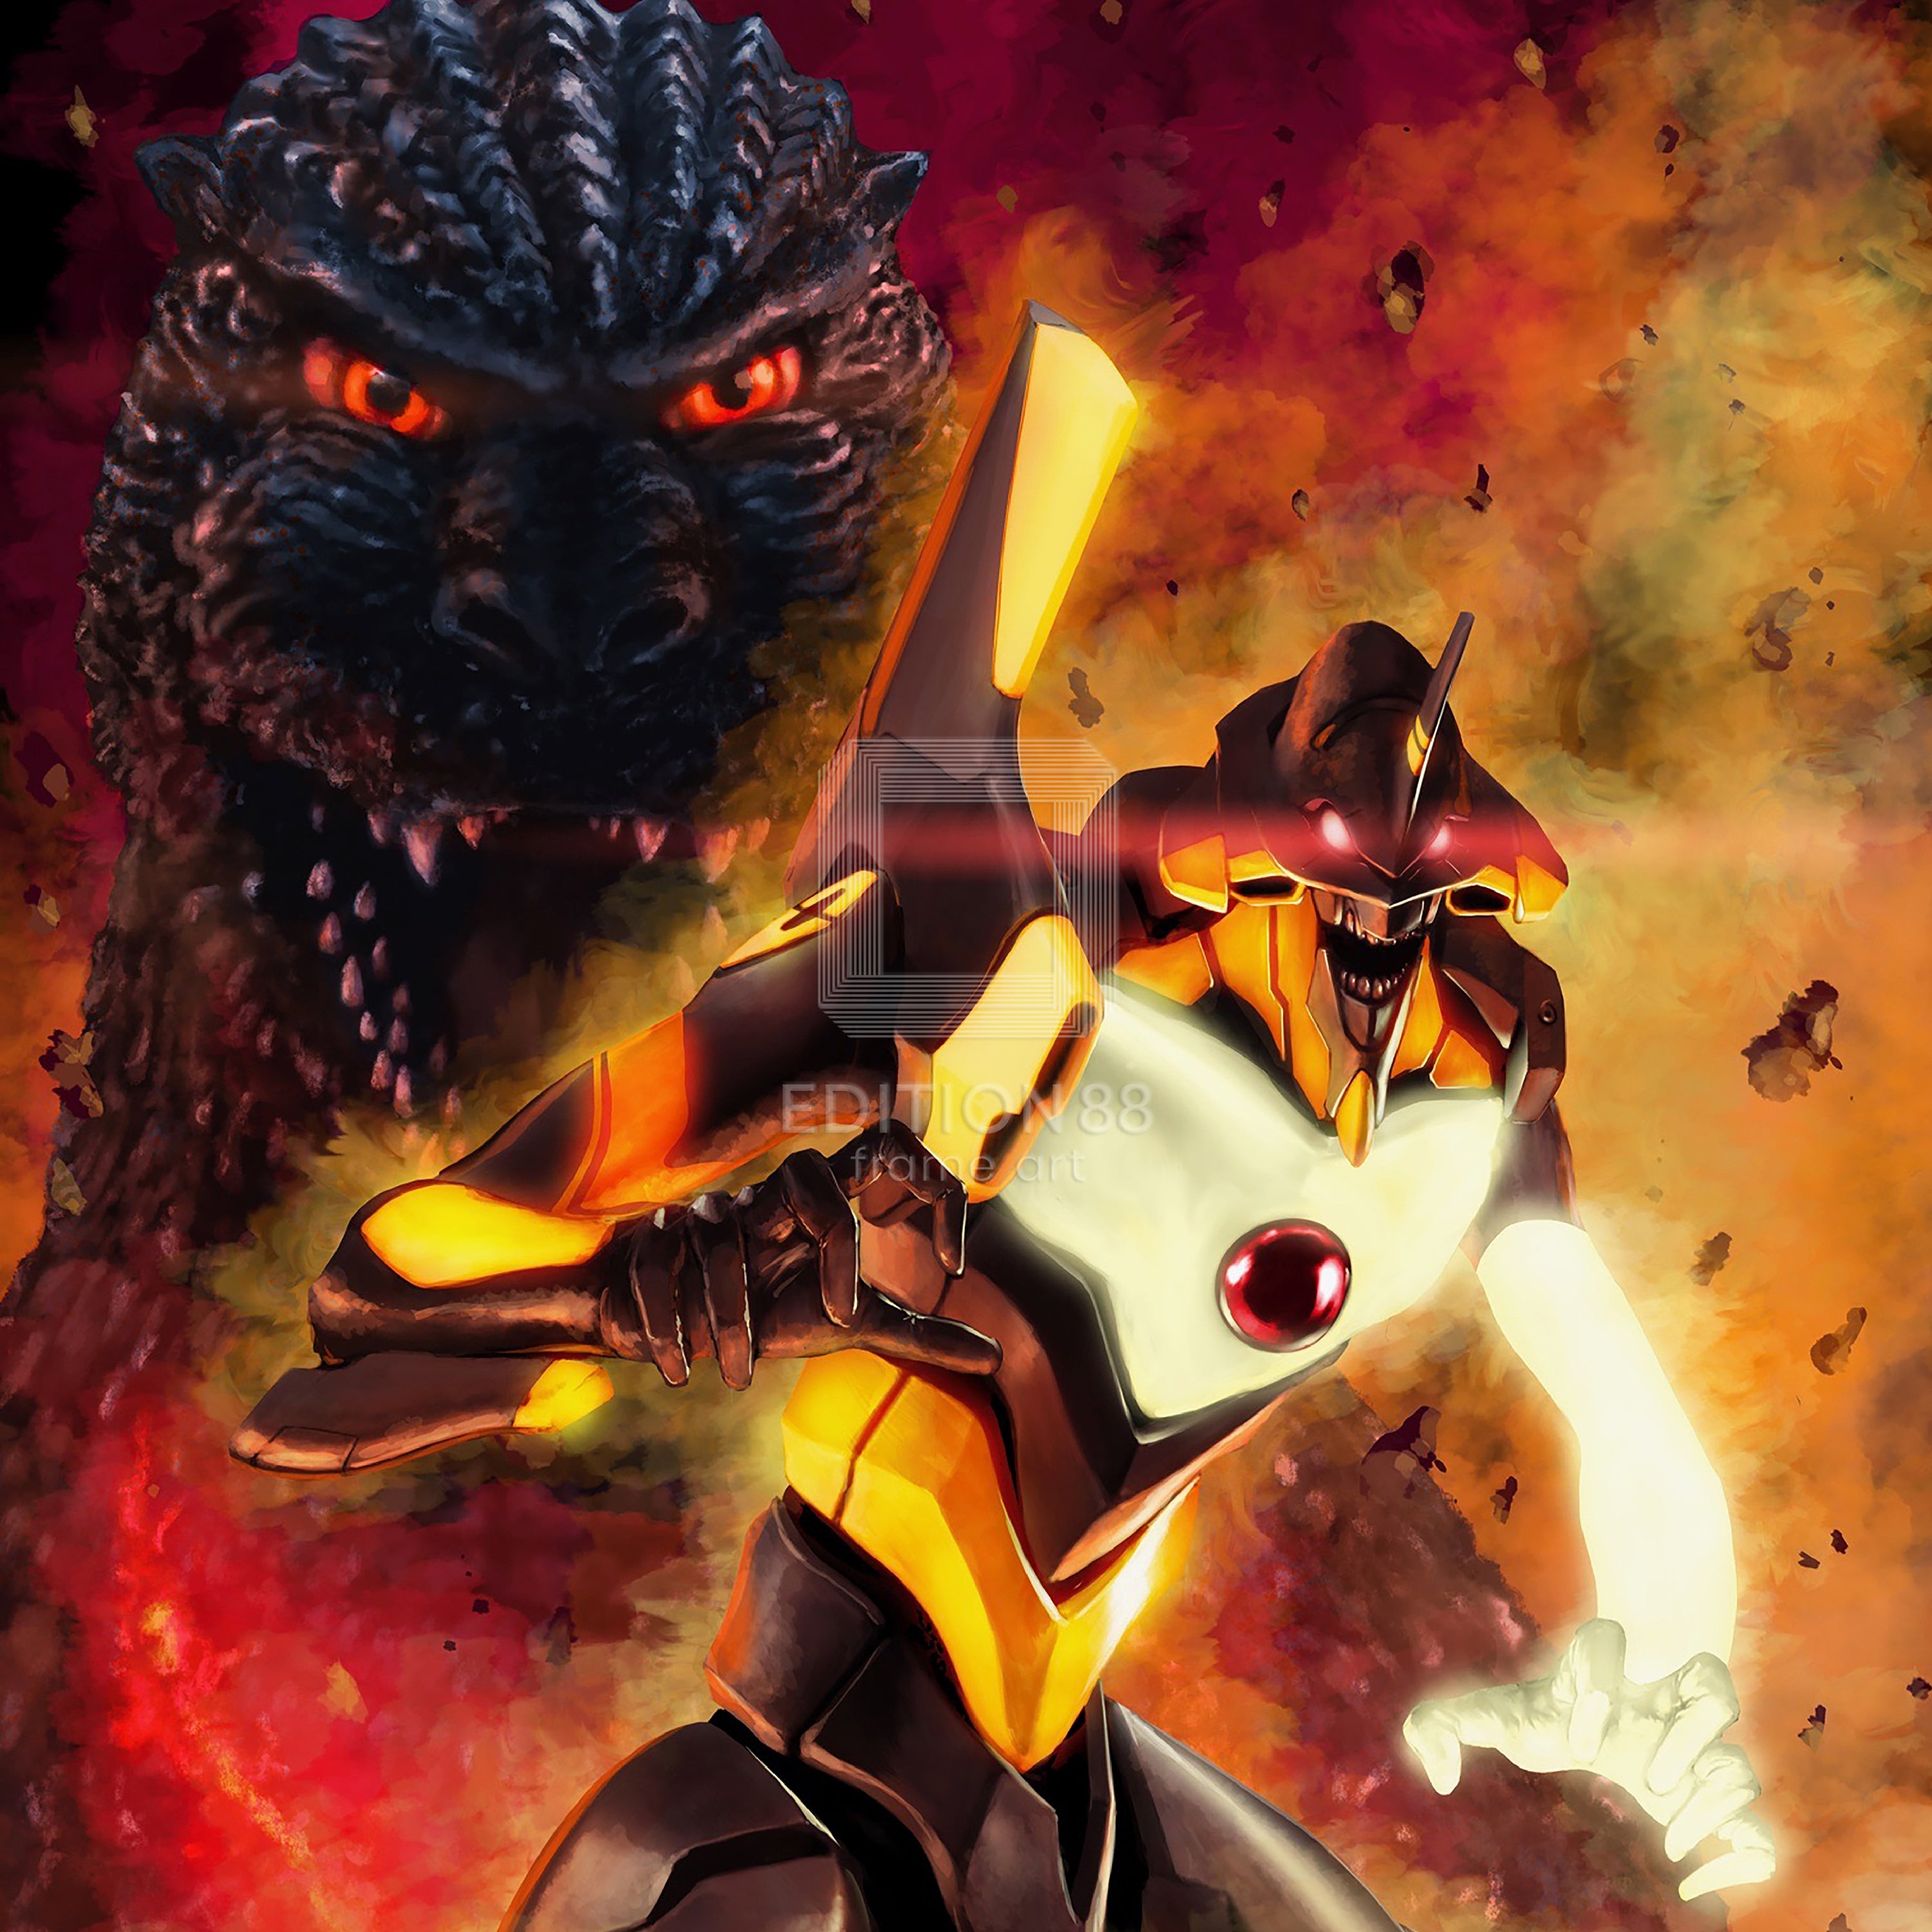 Godzilla vs. Evangelion, 88Graph / Hidetaka Tenjin